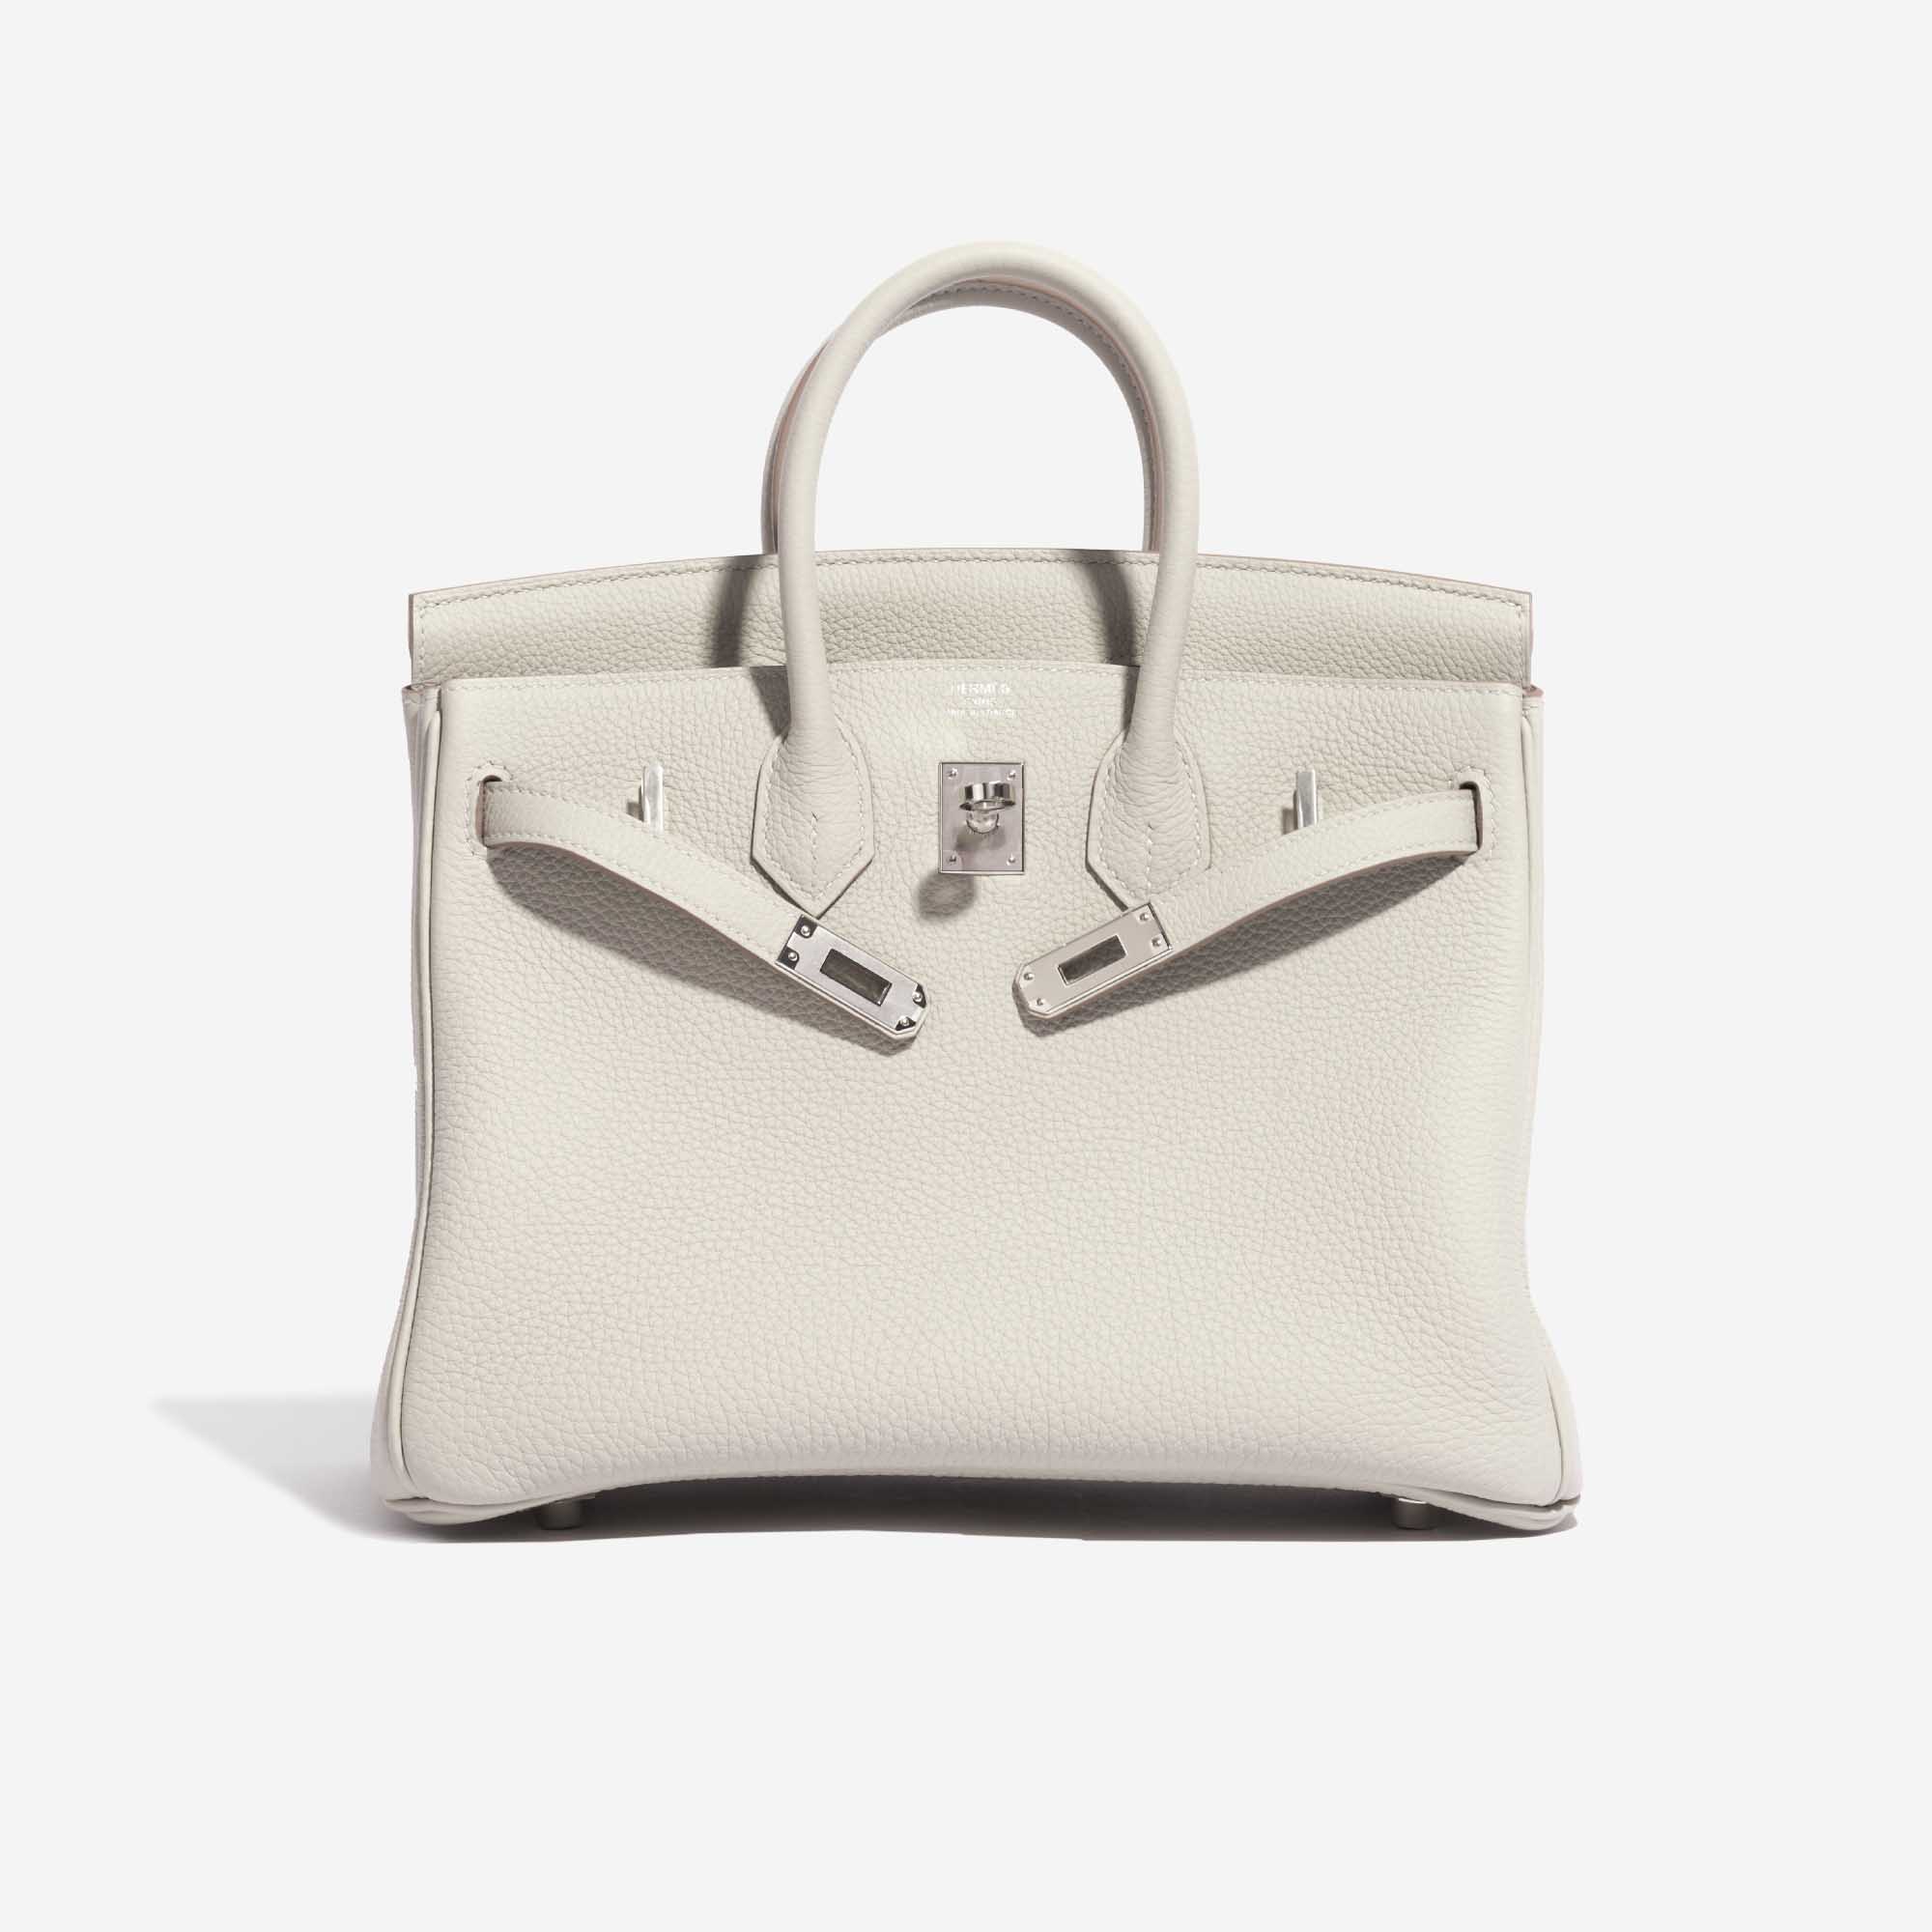 HERMÈS Birkin 25 handbag in Pearl Gray Togo leather with Nata